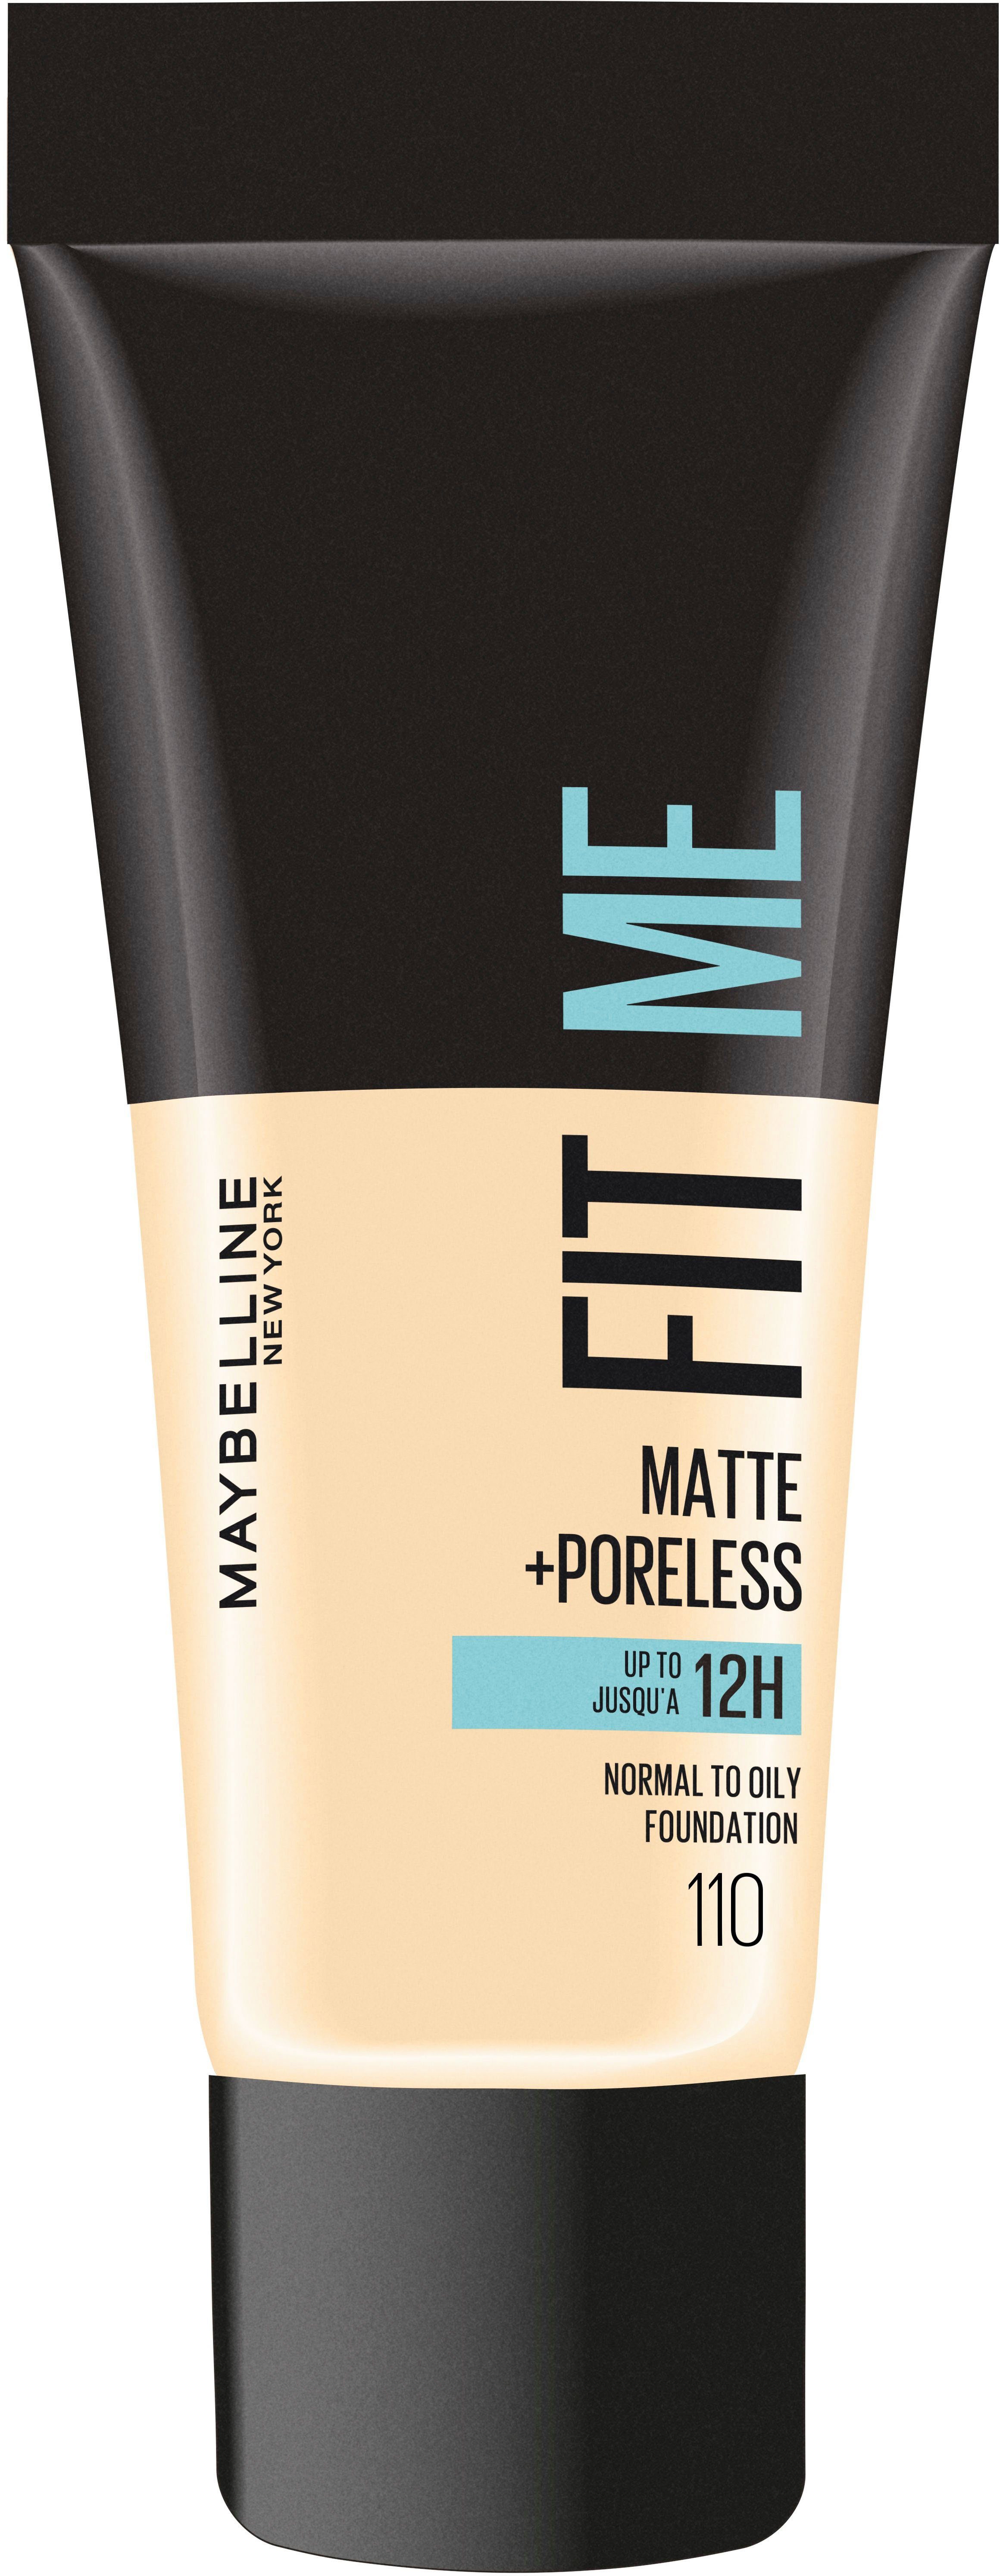 MAYBELLINE NEW YORK New Foundation Me! Maybelline Fit Poreless Make-Up York Matte 